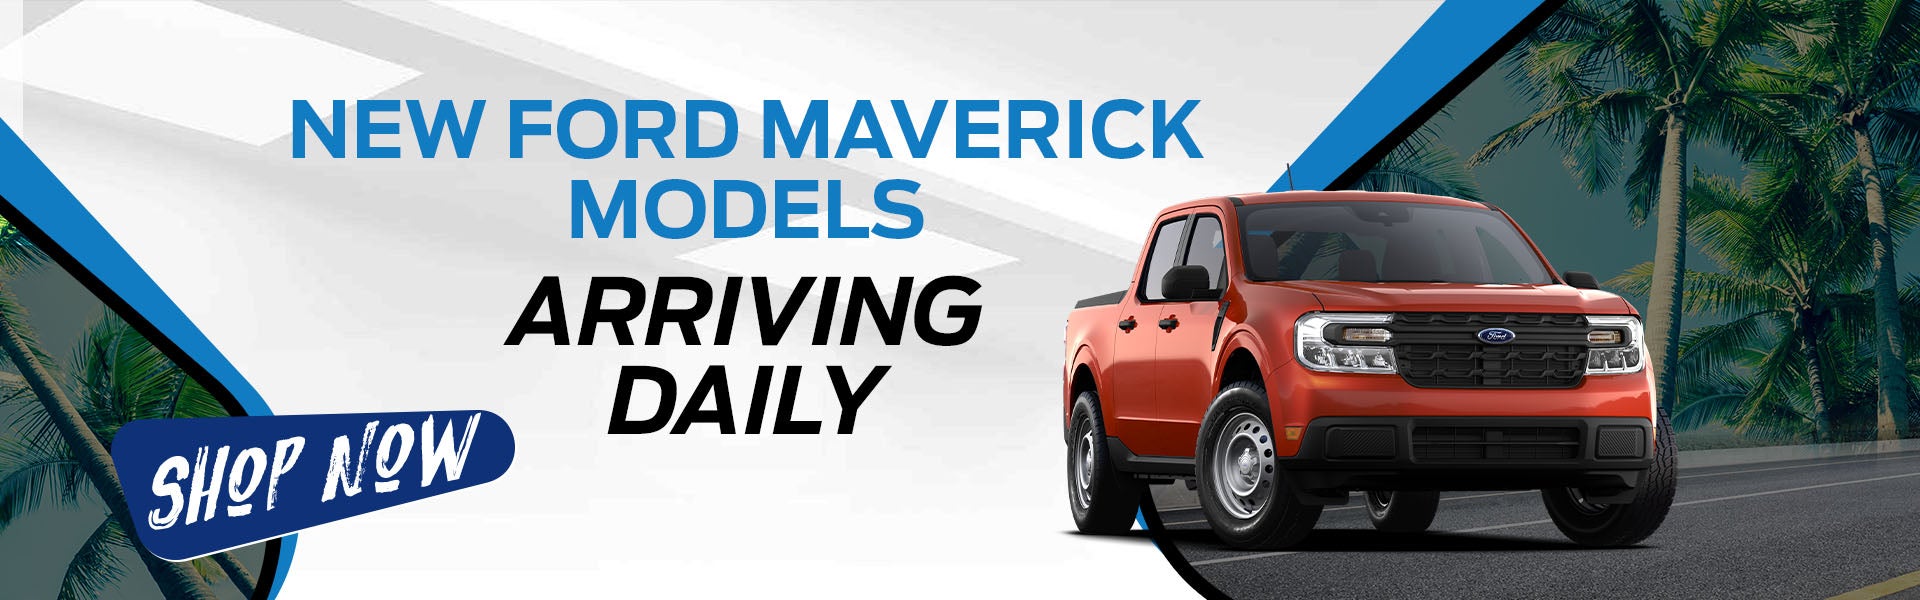 Ford Maverick models arriving daily